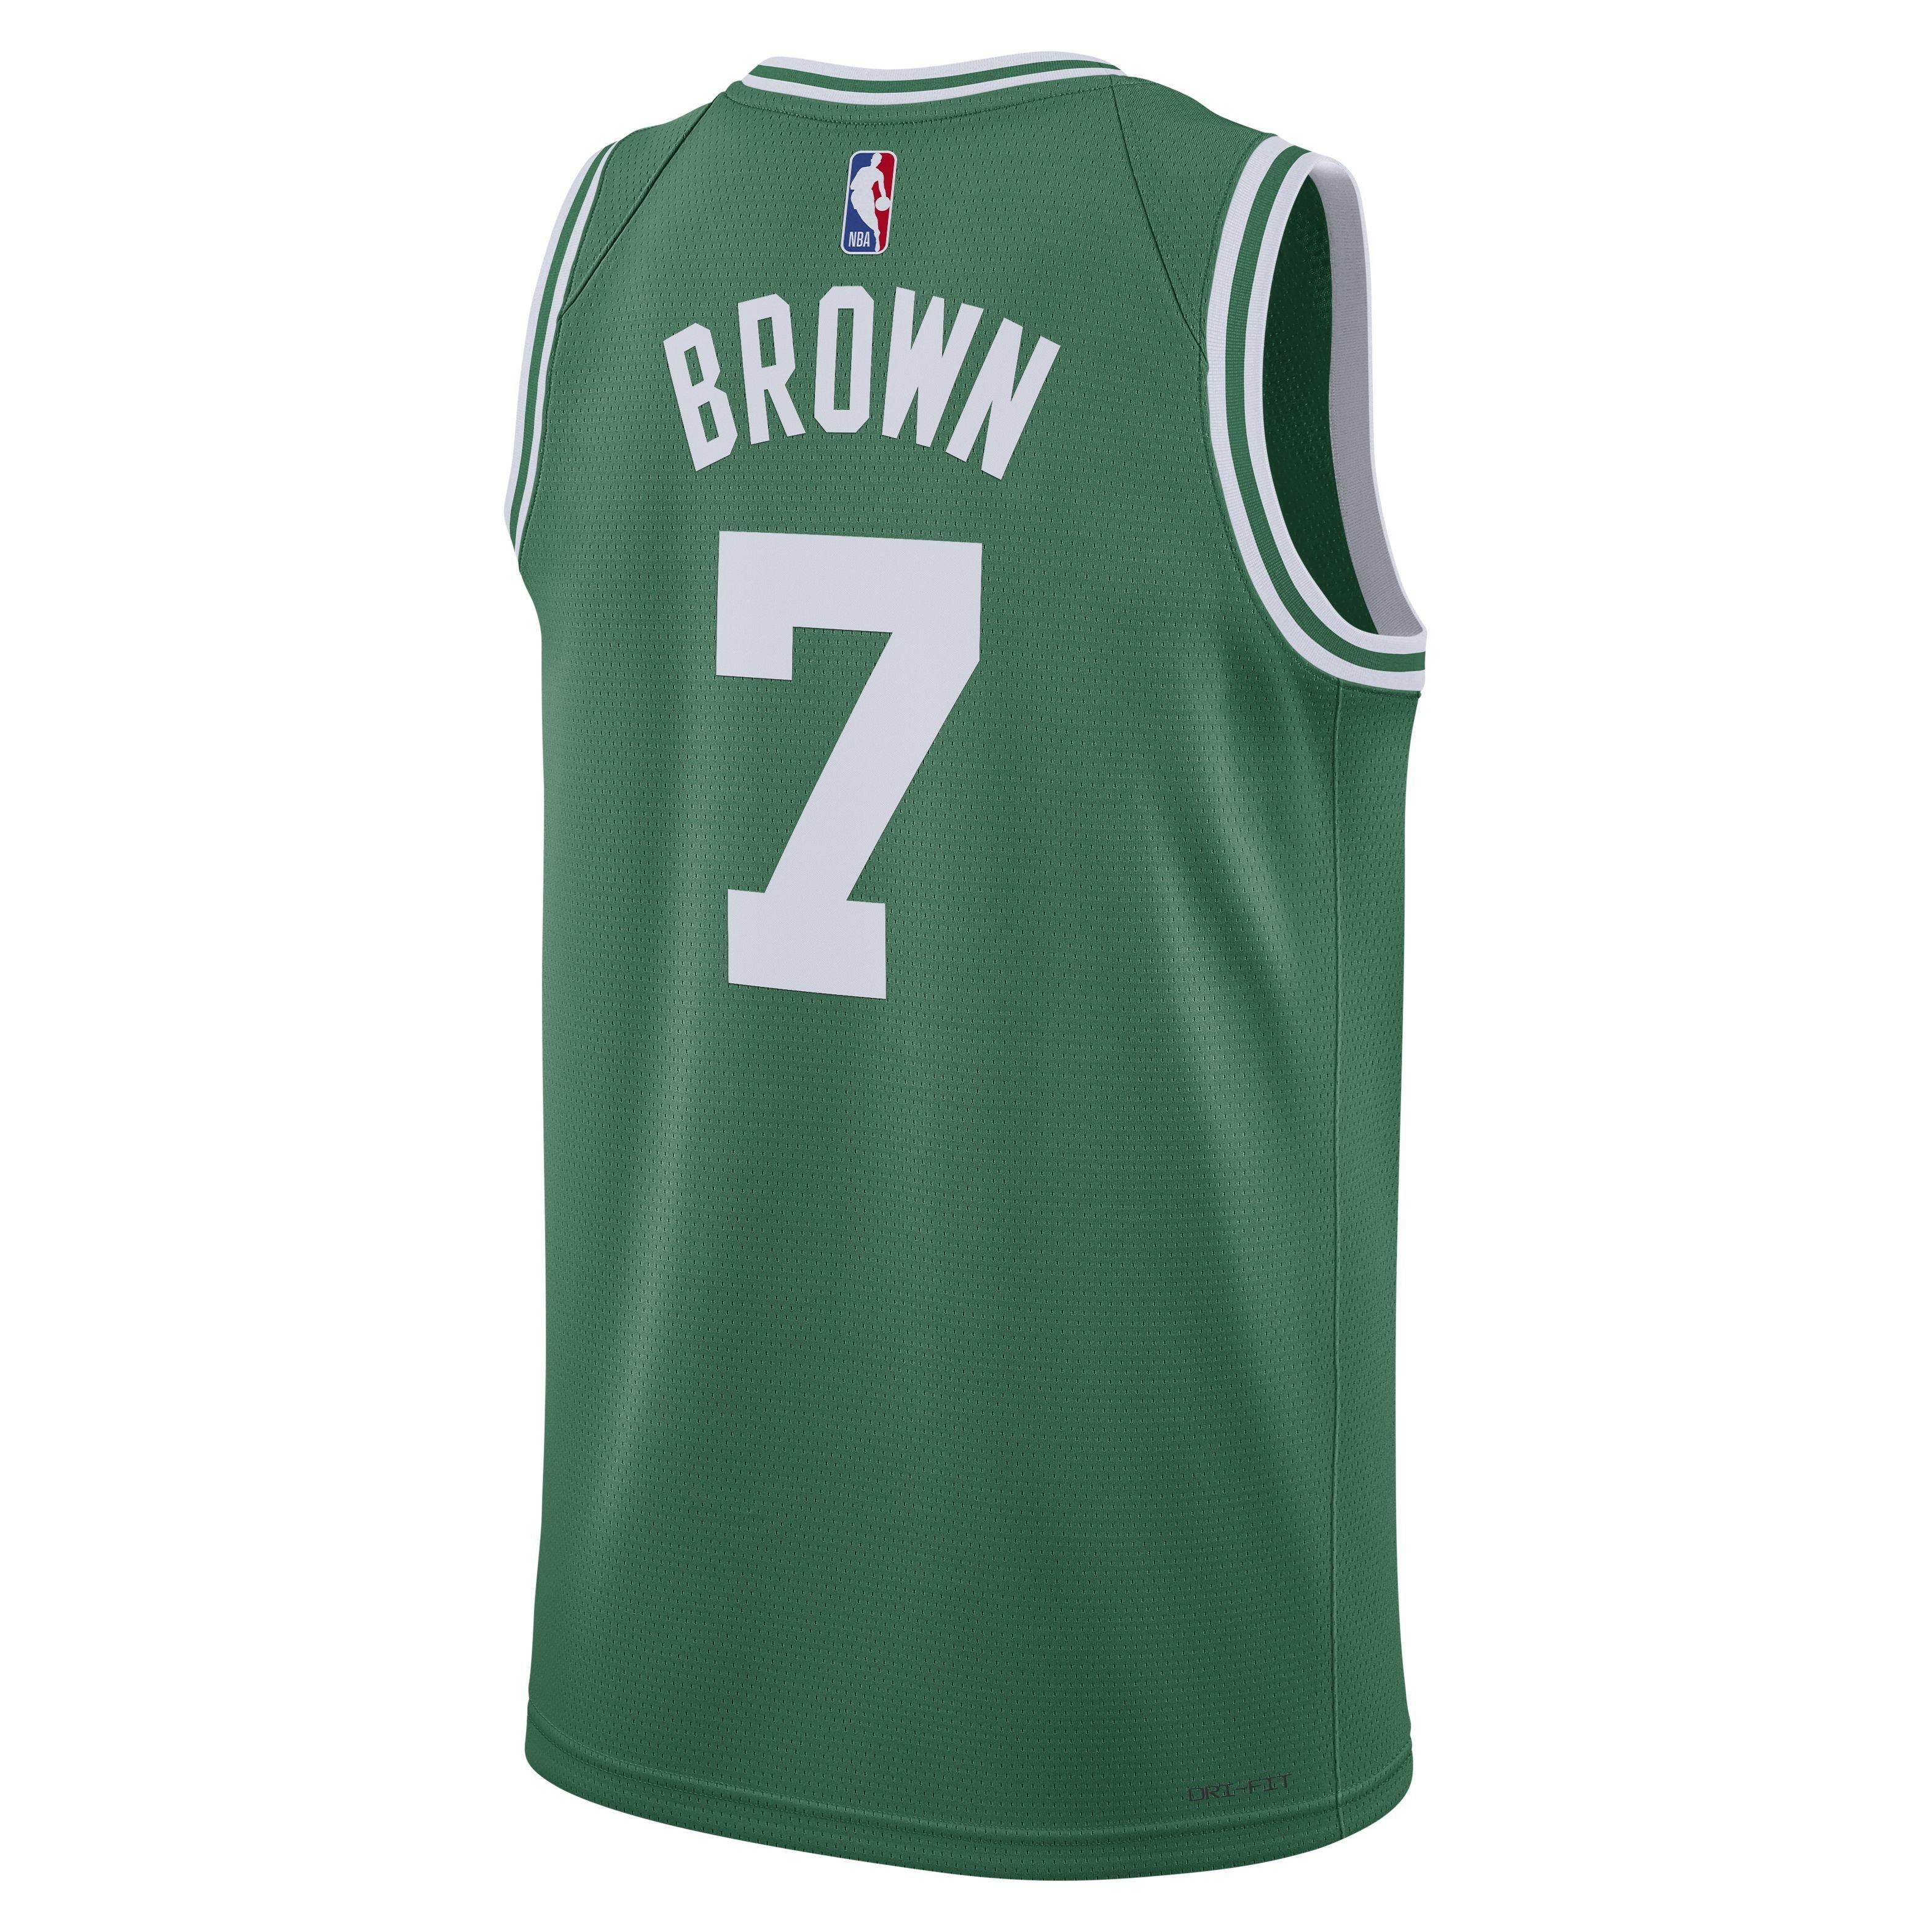 Jaylen Brown's Adidas Kicks - Boston Celtics History